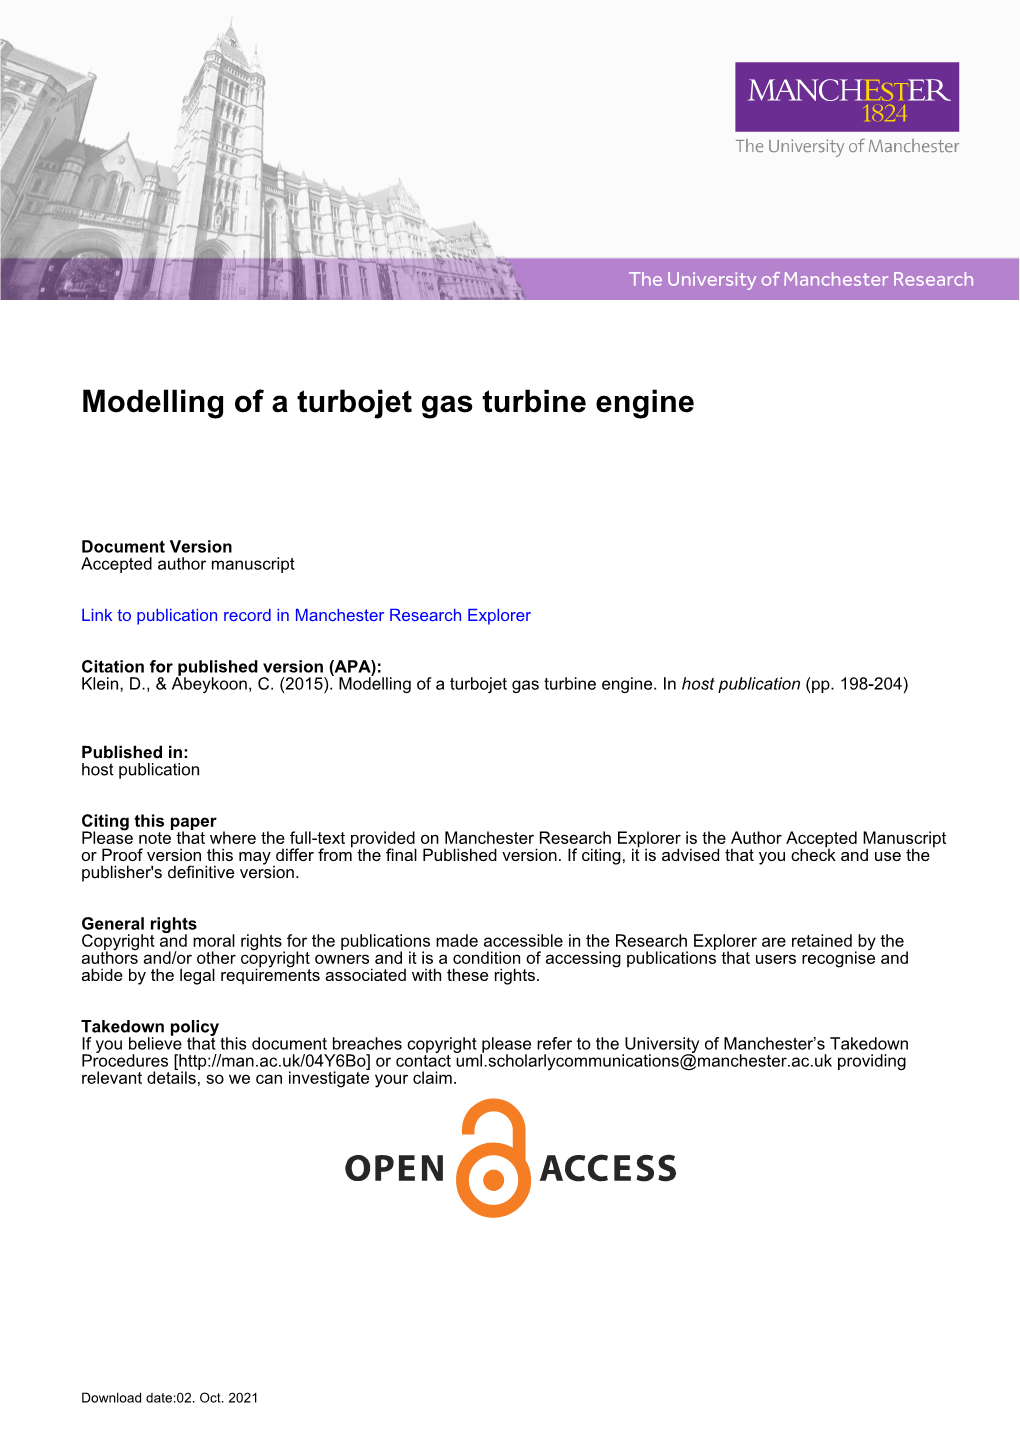 Modelling of a Turbojet Gas Turbine Engine